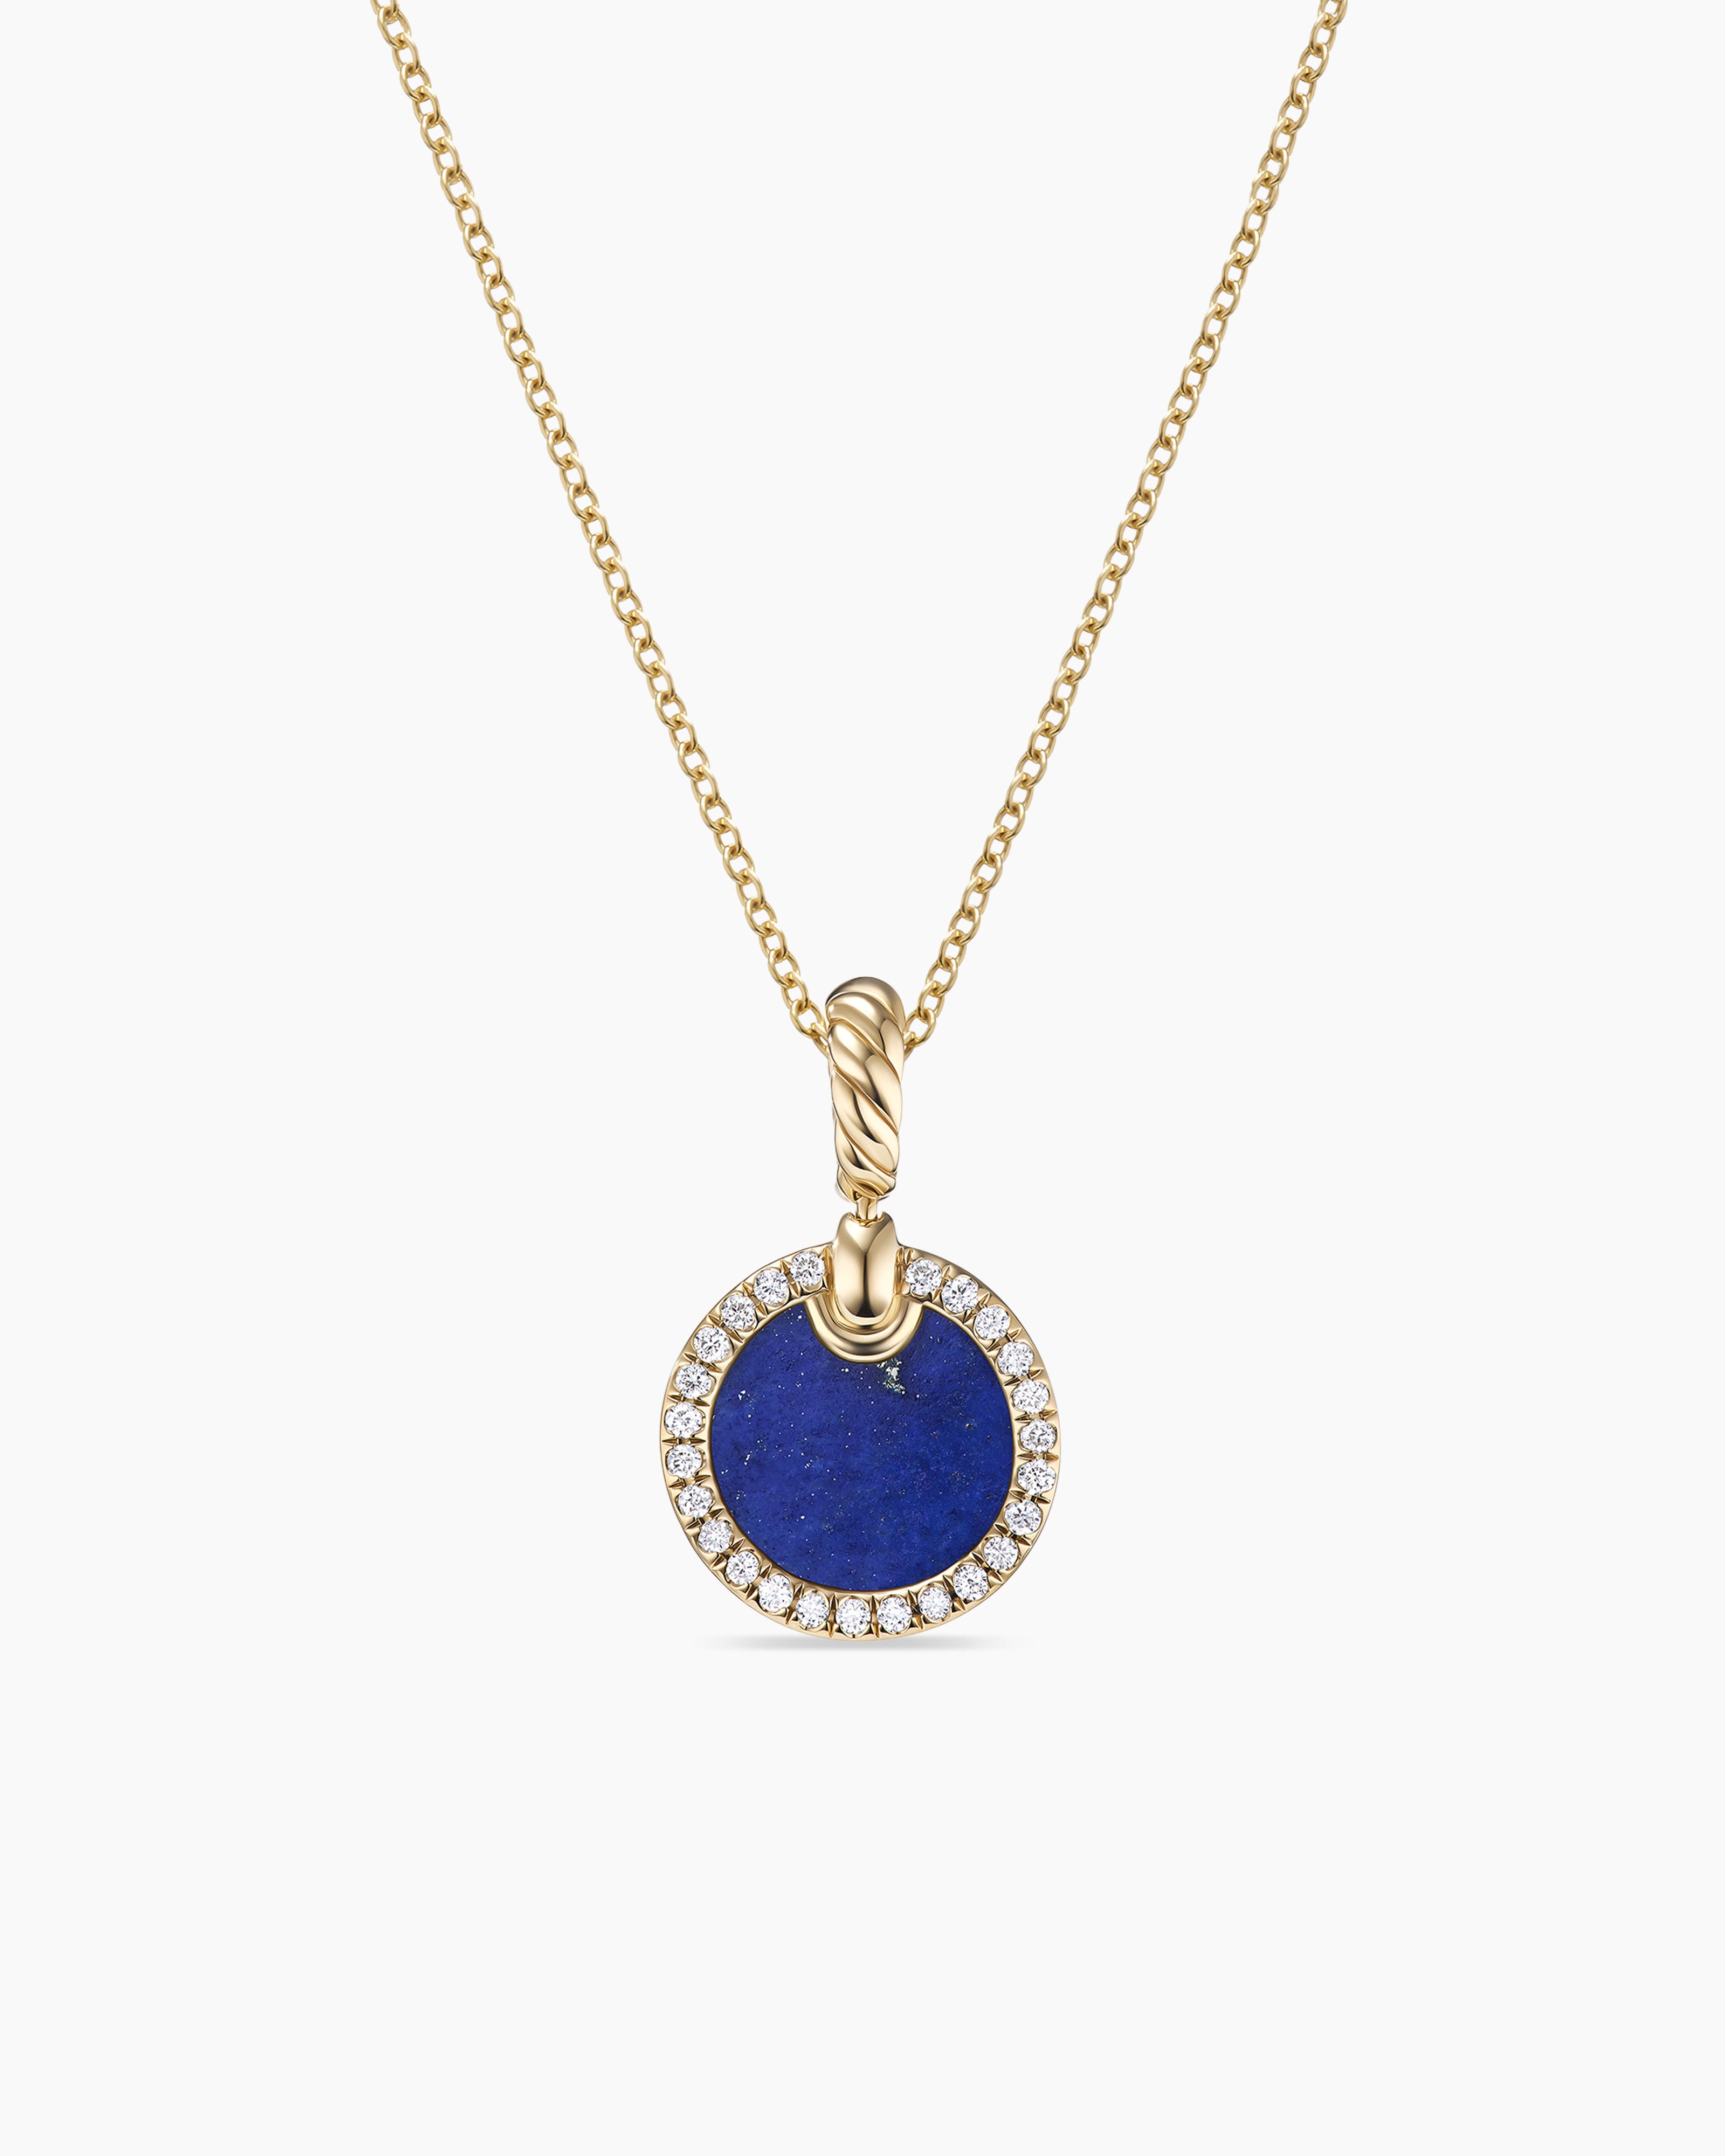 David Yurman Petite Infinity Pendant Necklace